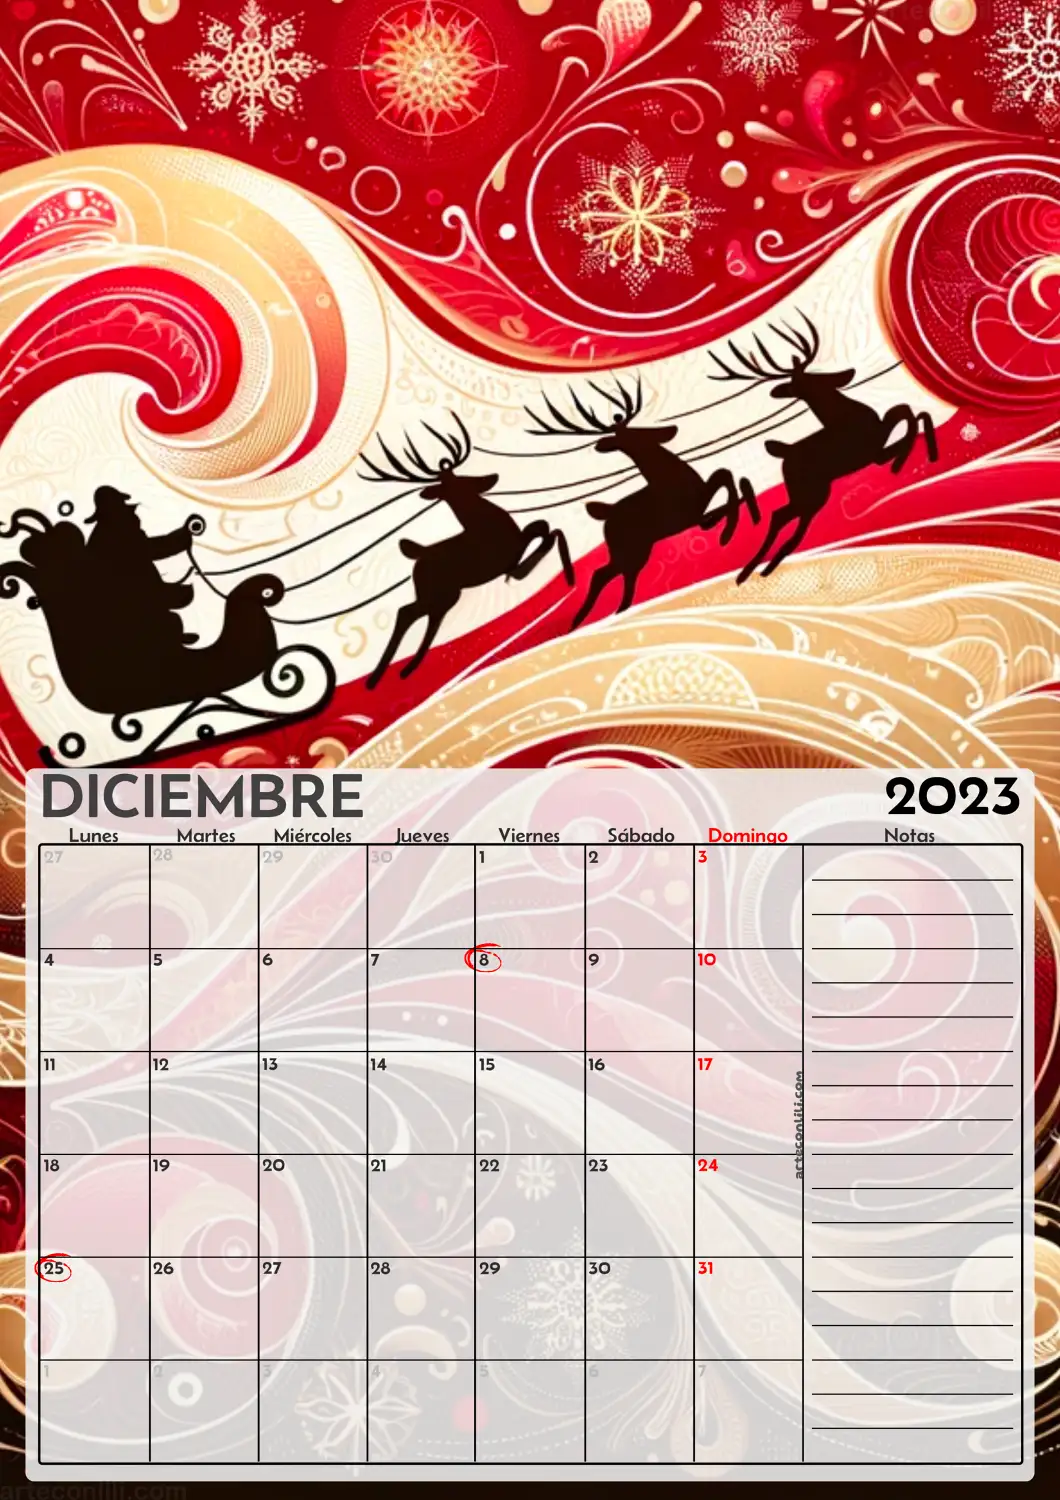 calendario diciembre 2023 motivos navidad arteconlili.com3